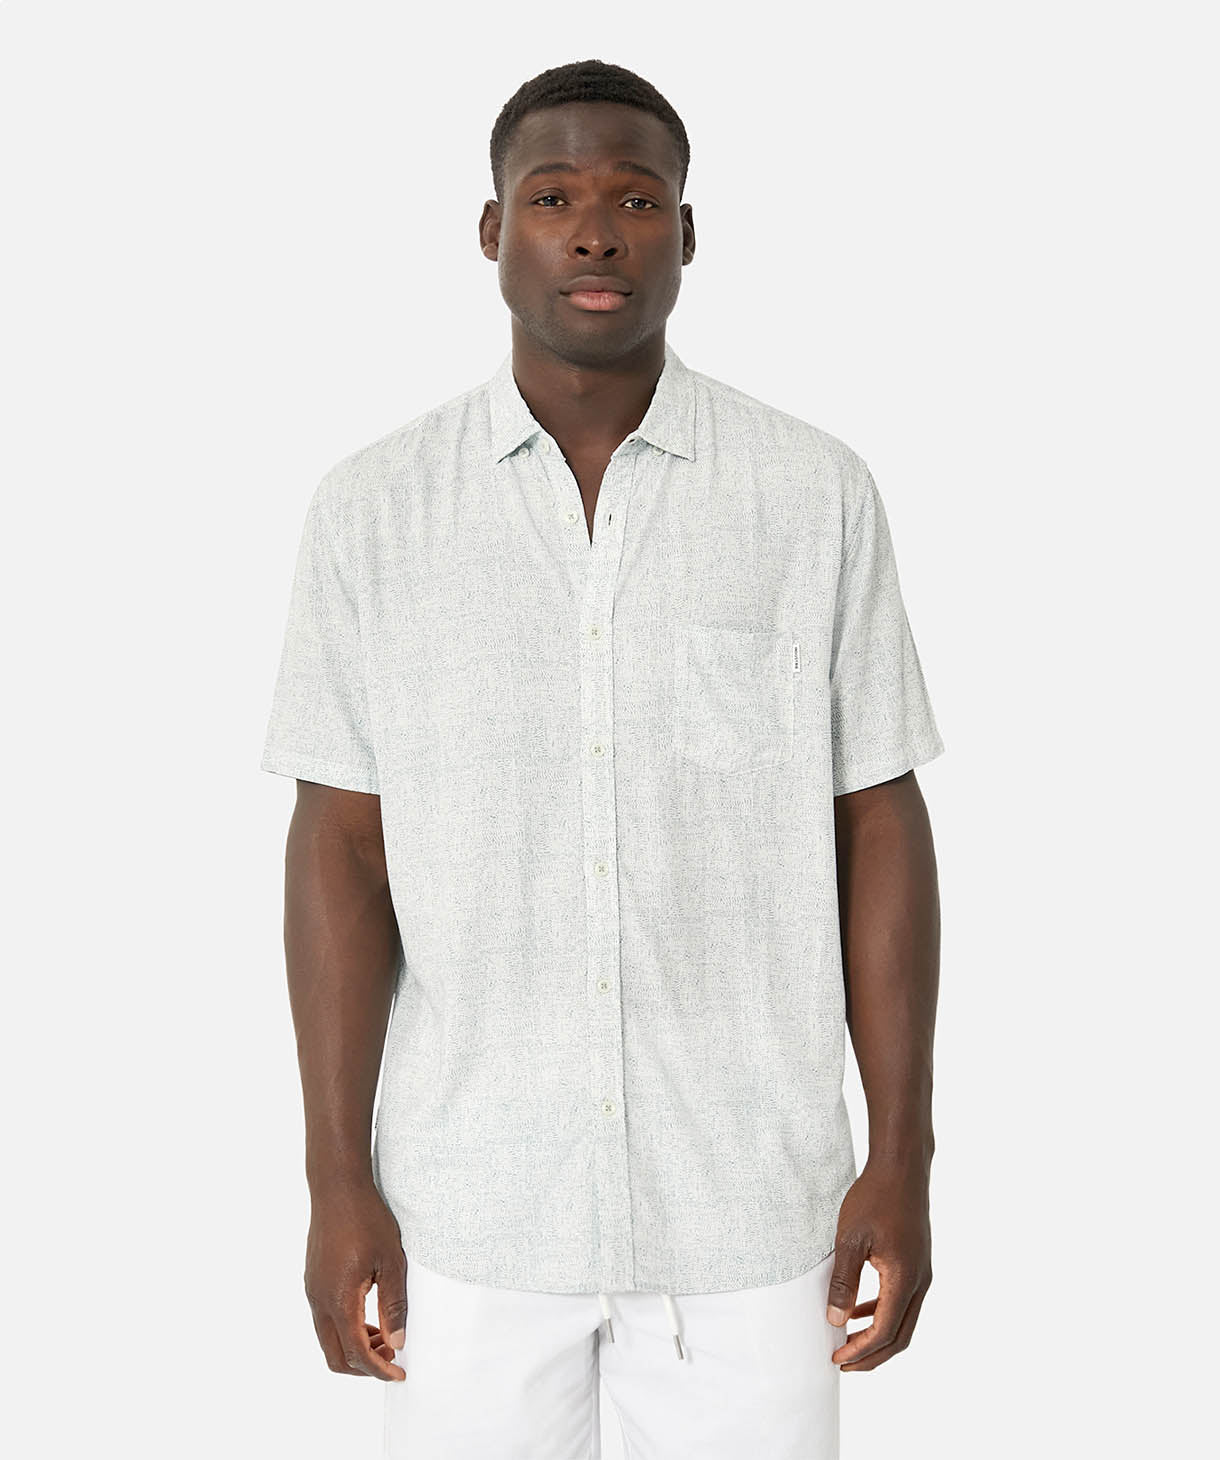 The New Talavera S/s Shirt - Off White/Marine – Industrie Clothing Pty Ltd